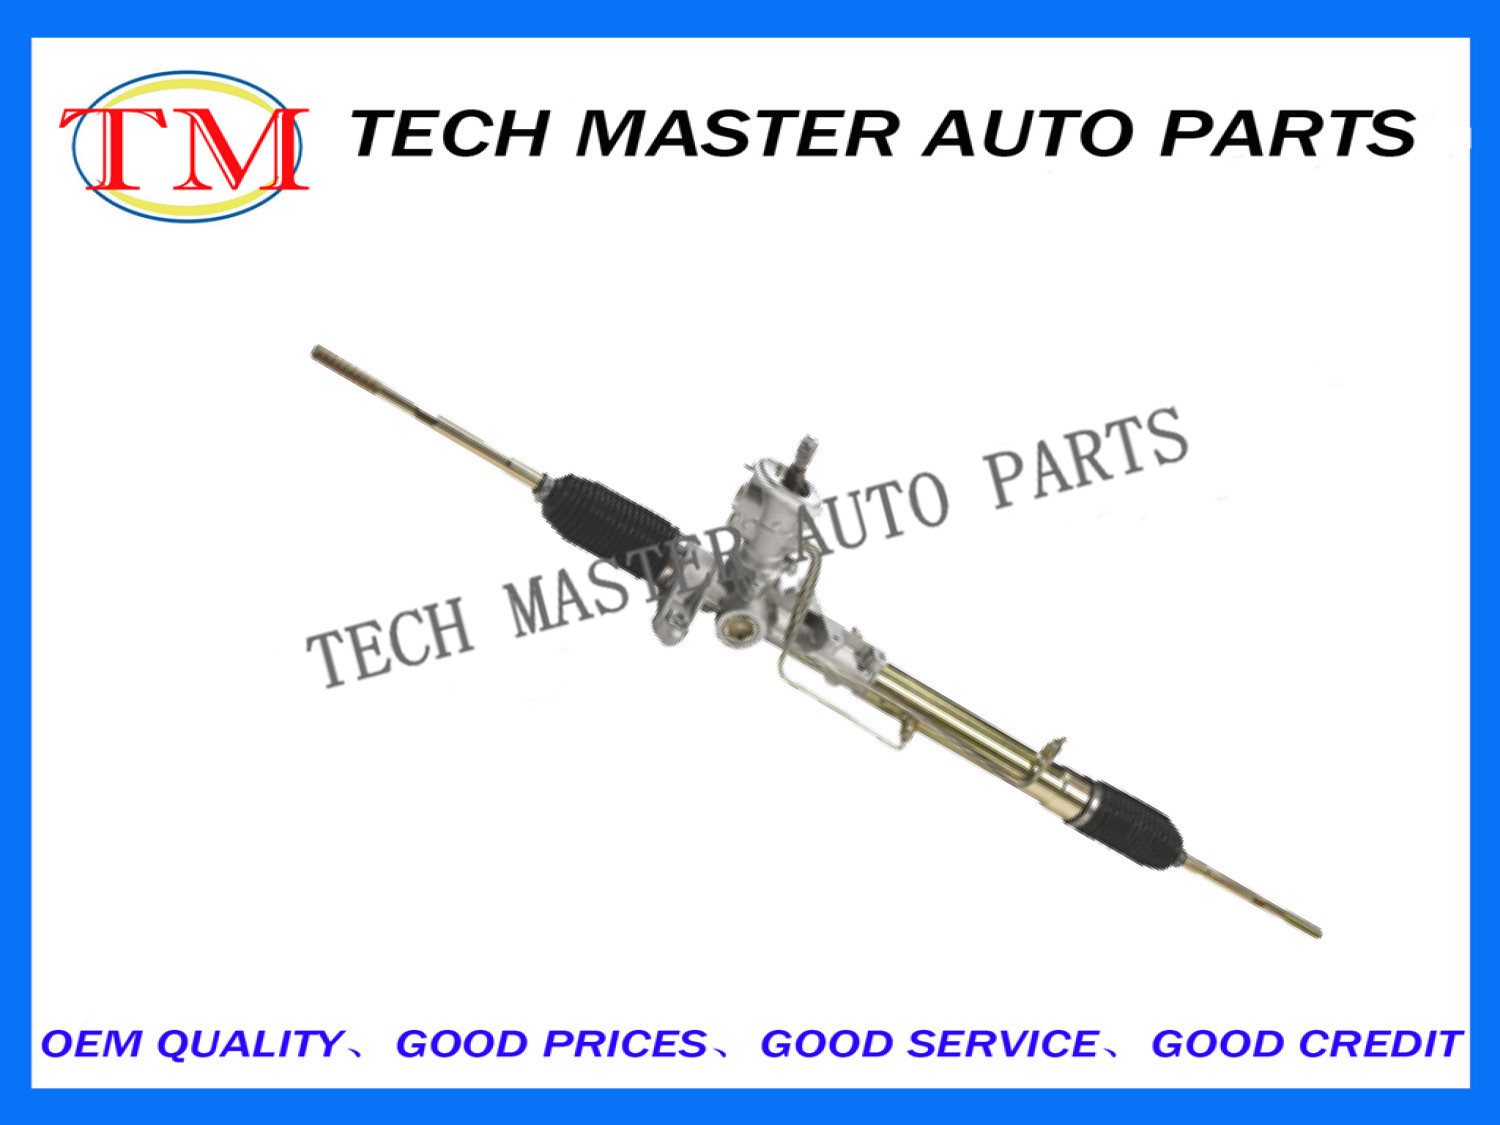 Quality Audi A4 Power Steering Rack VW Golf Beetle Rack Pinion Steering 1J1422105 1J1422061SX for sale